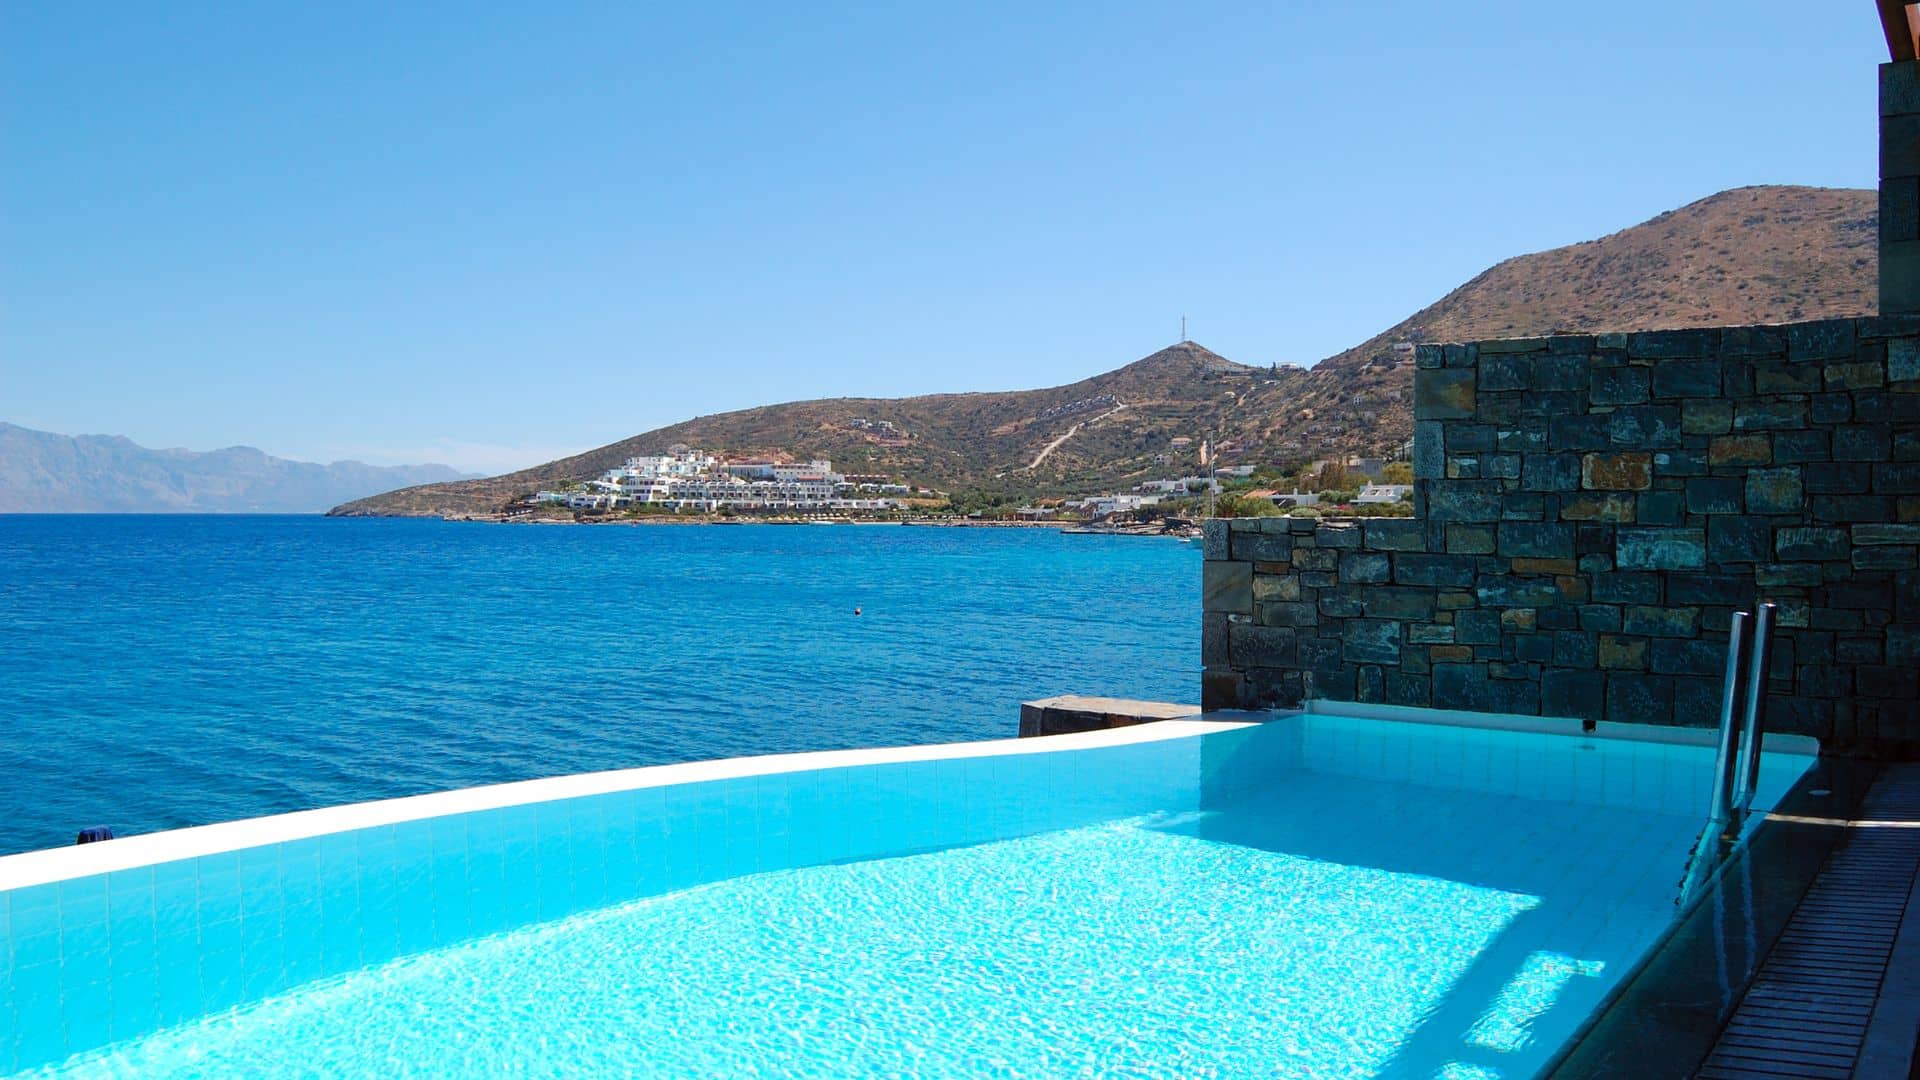 Villas in Crete with private pool-Vivestia | Risk-Free Villas, Hotels and Cruises in VR